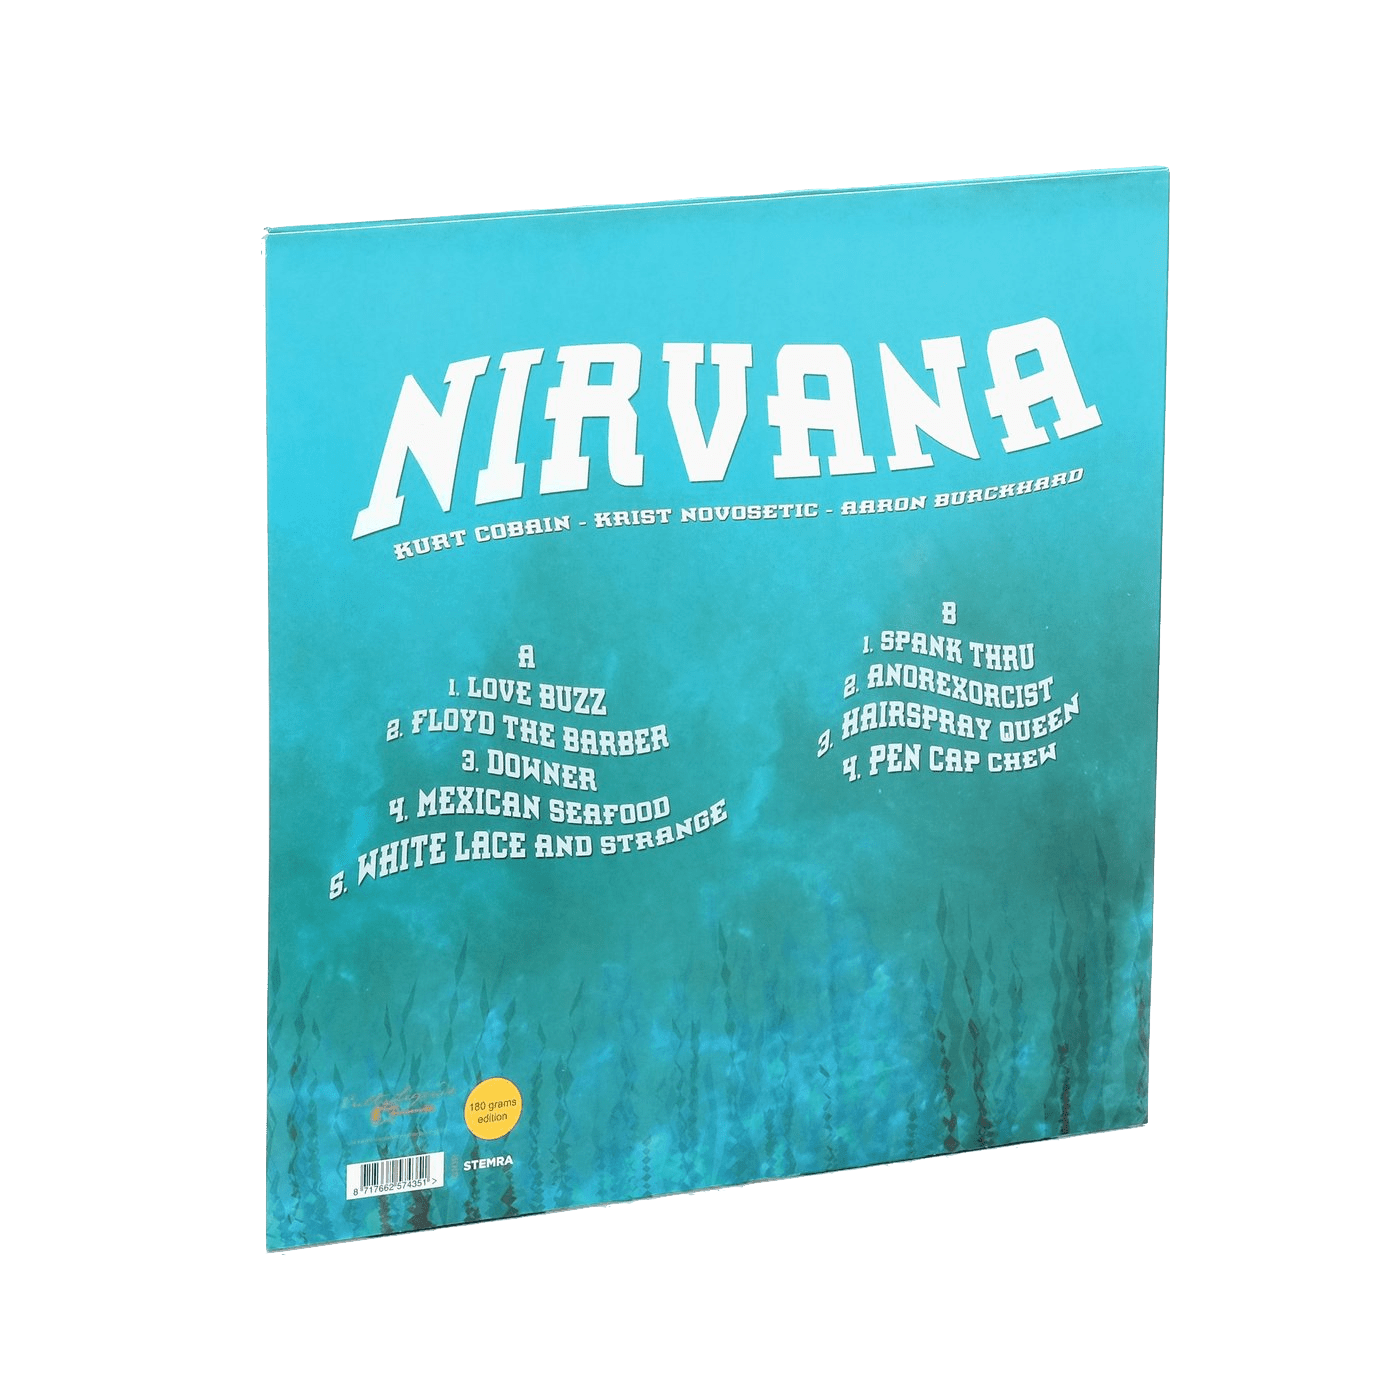 Nirvana - Live On Air, 1987 (Limited Import, 180 Gram) (LP) - Joco Records